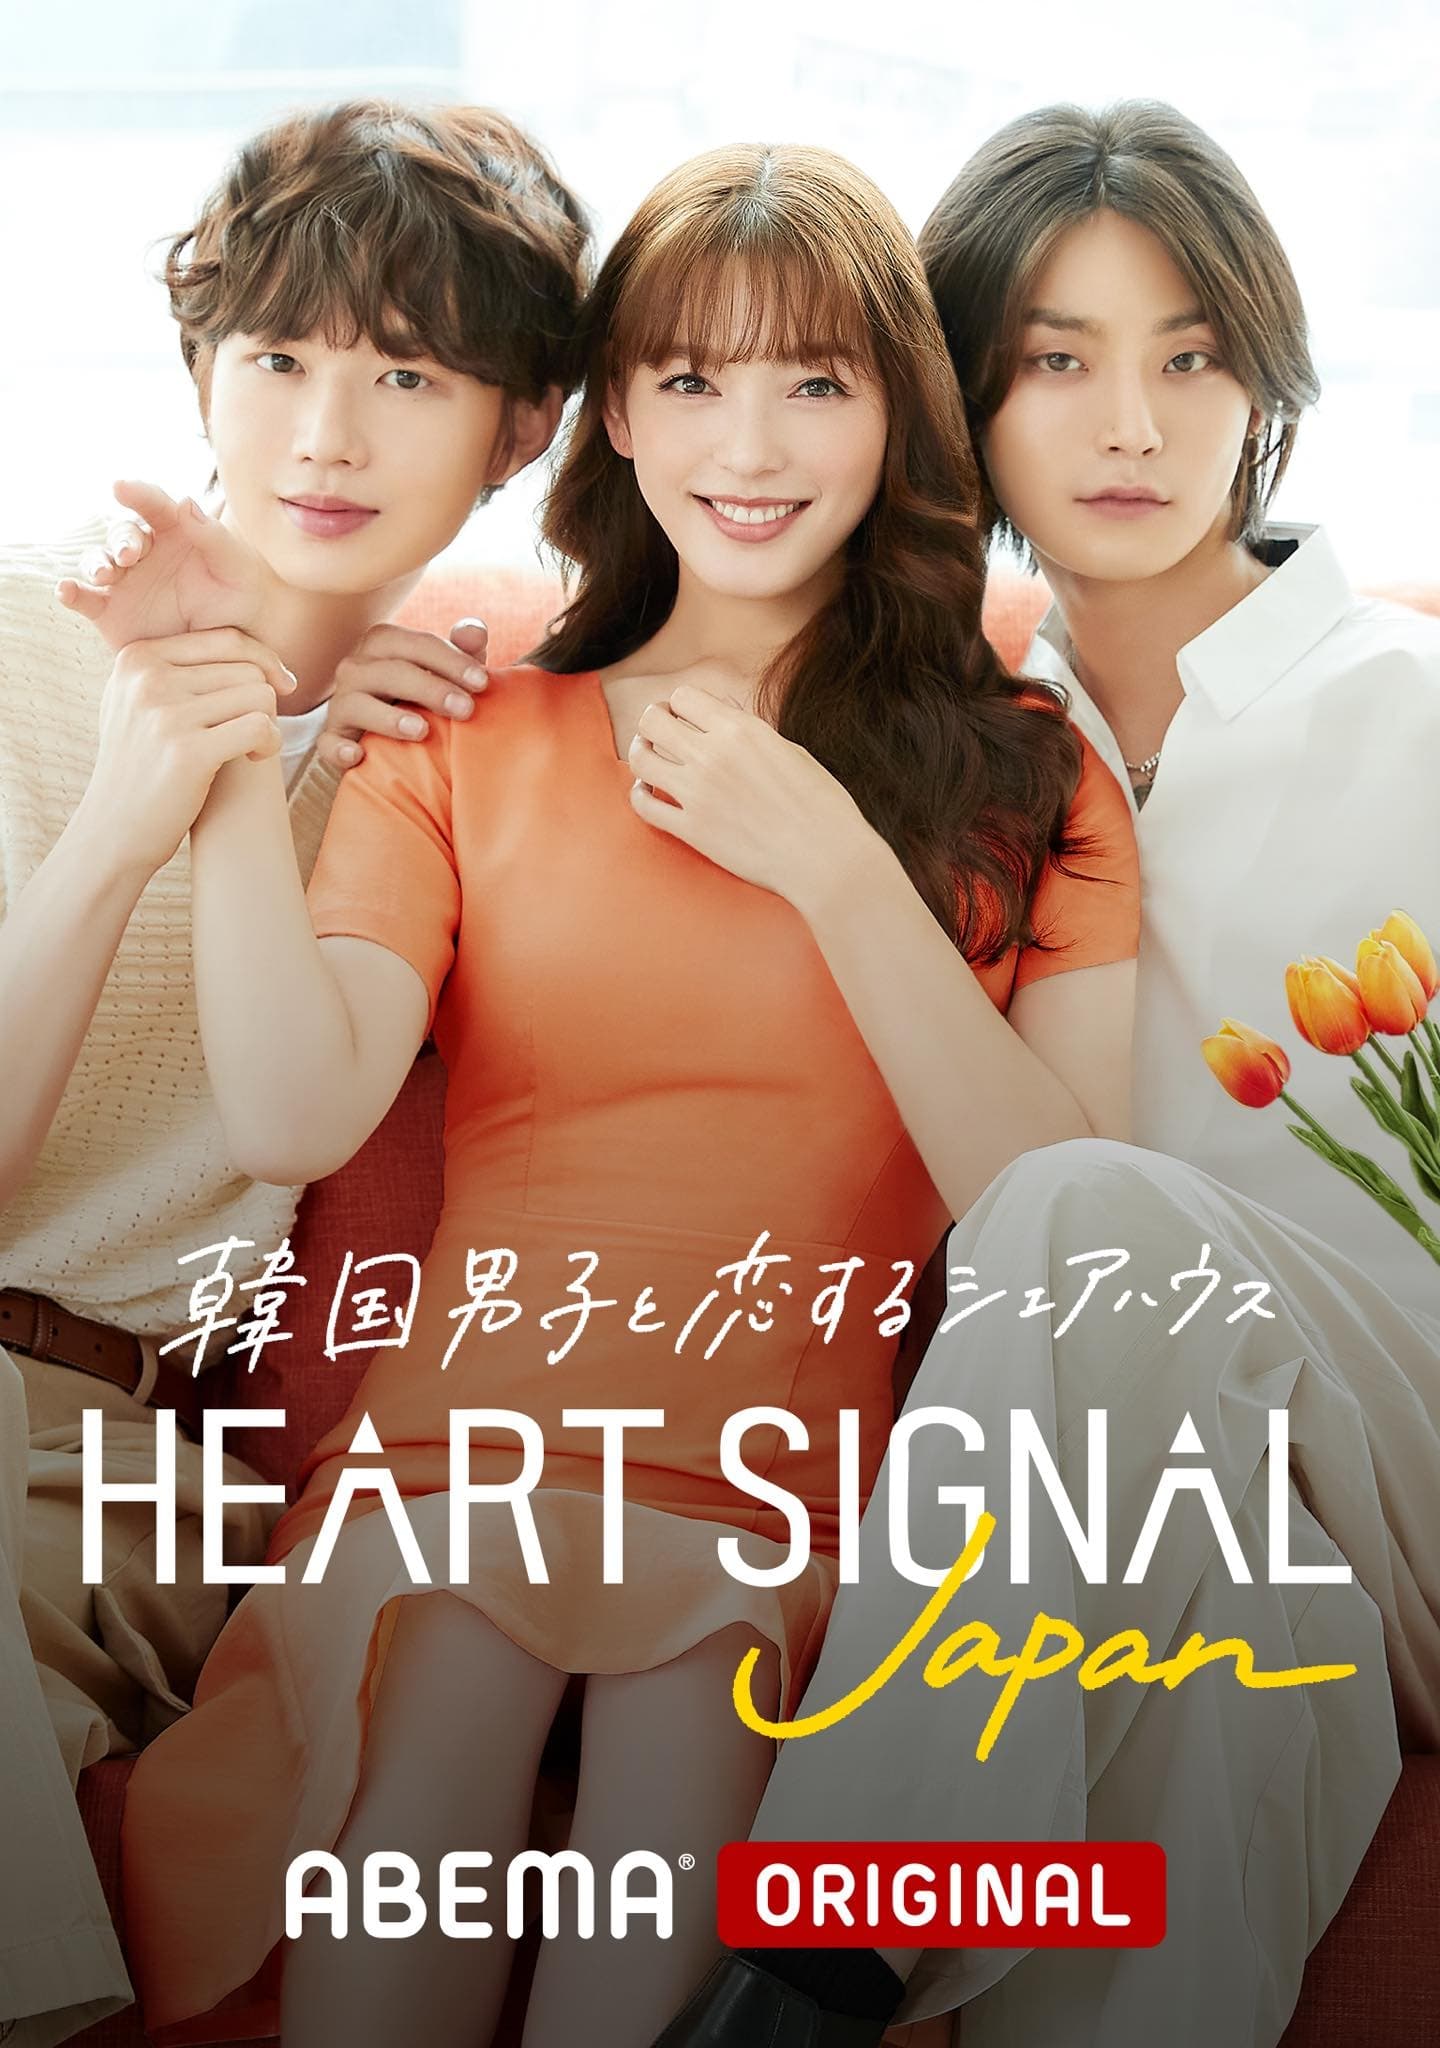 TV ratings for Heart Signal Japan in Portugal. AbemaTV TV series